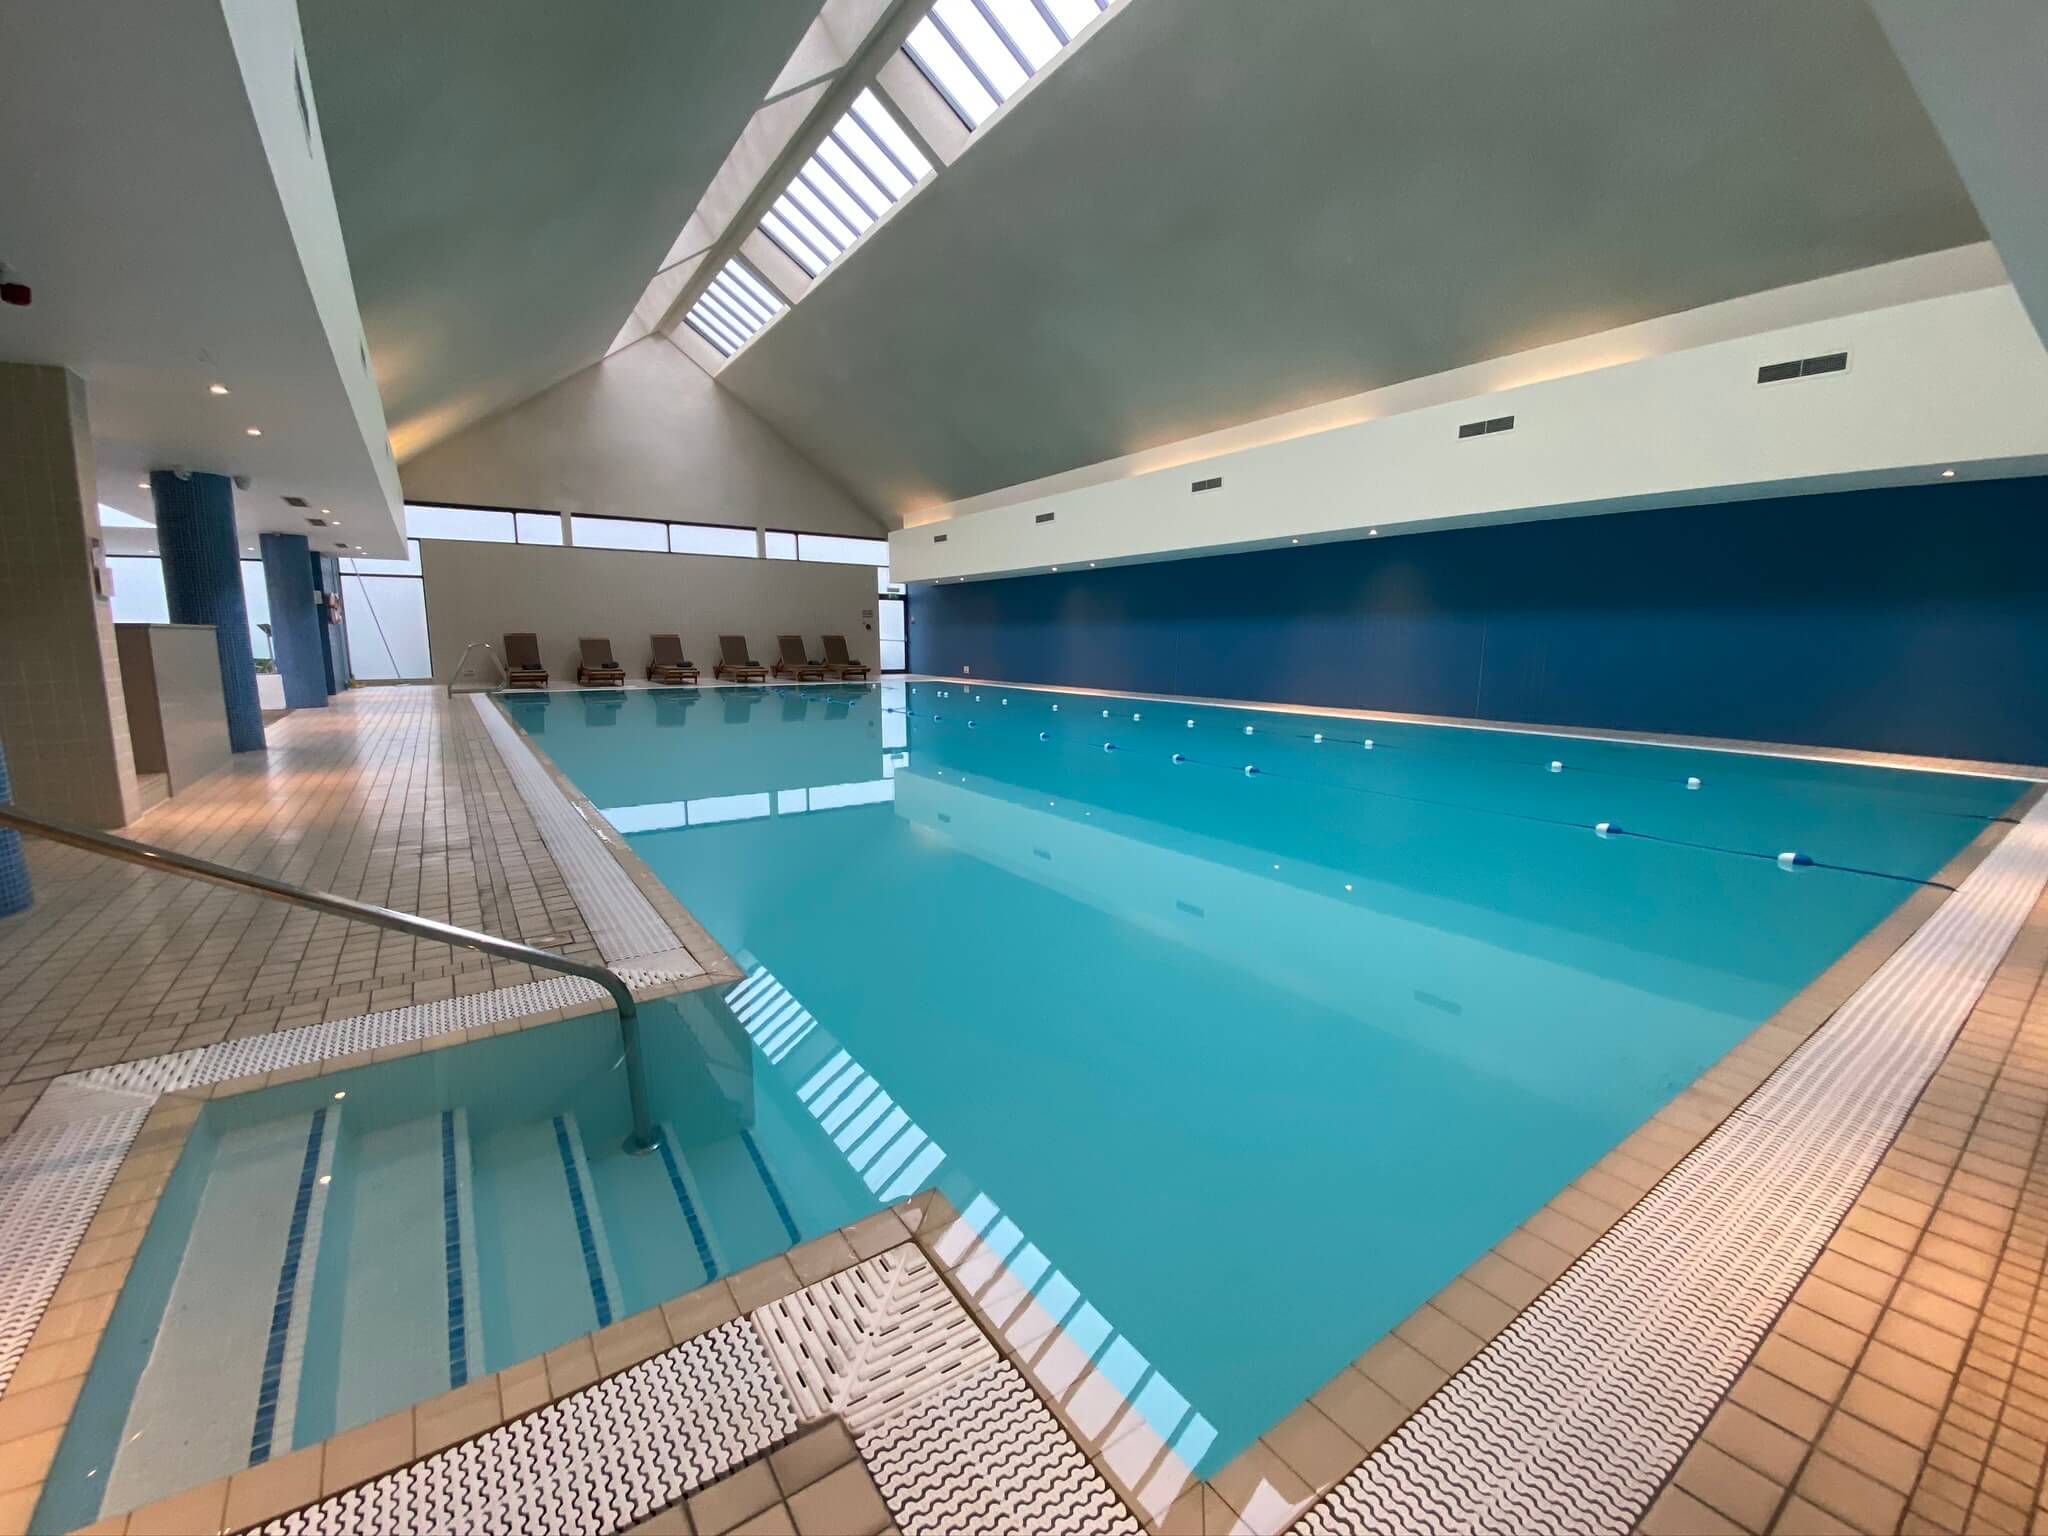 Fantastic swimming facilities